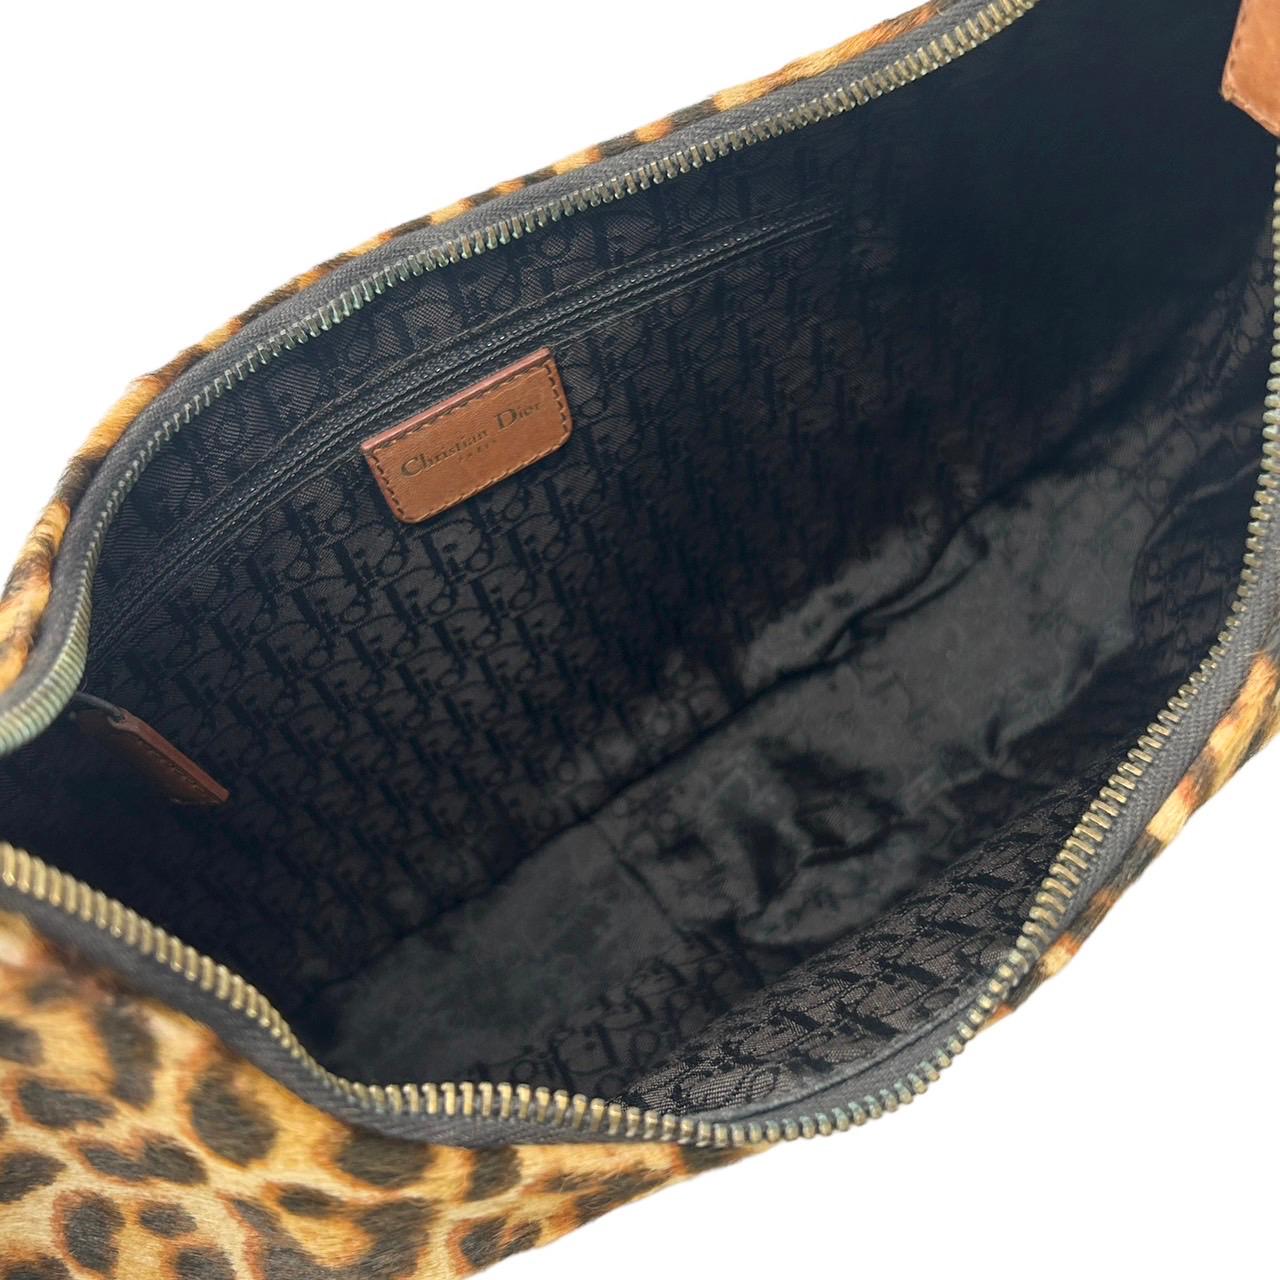 Dior Cheetah Calf Hair Shoulder Bag